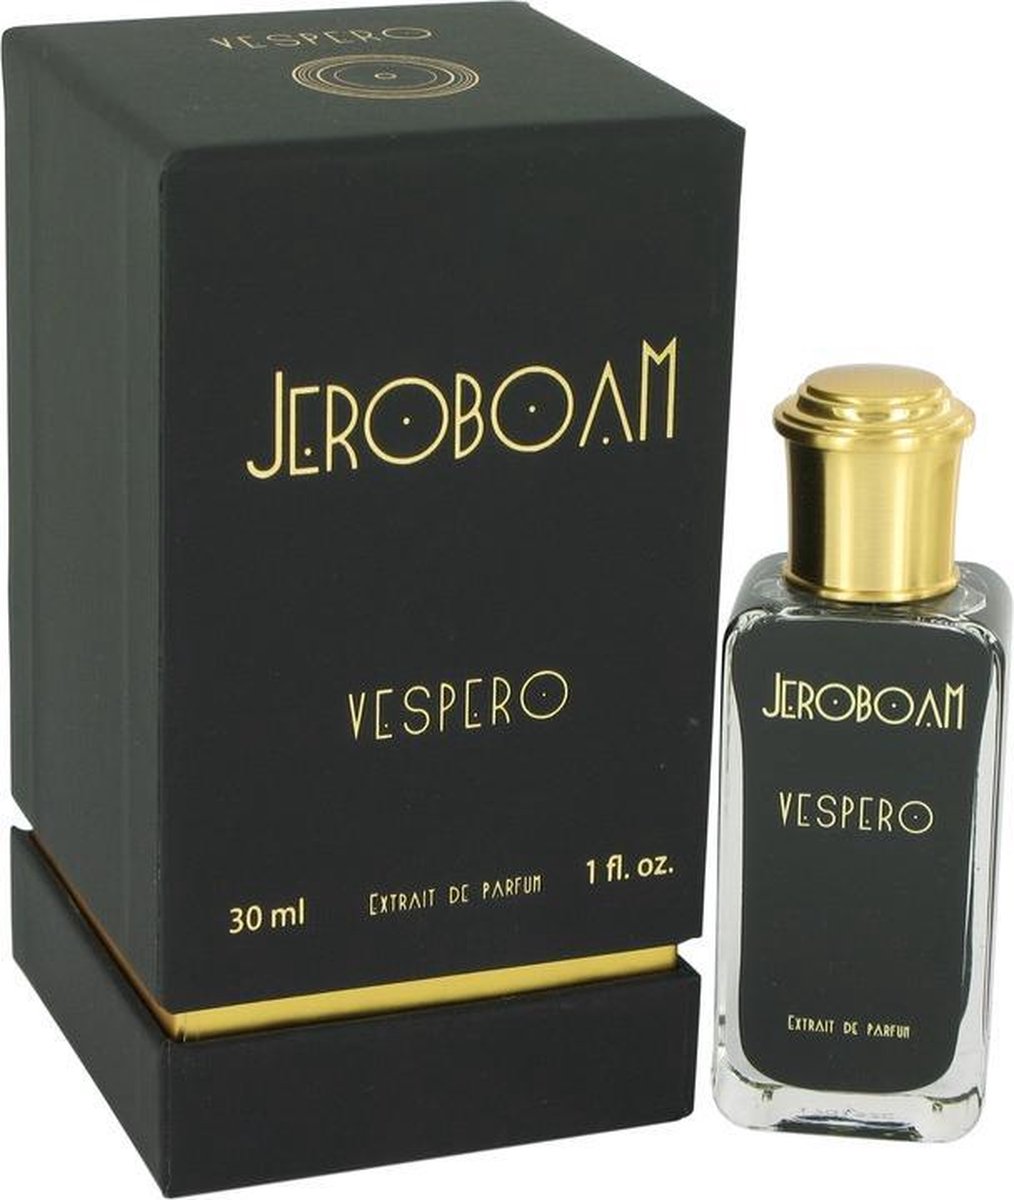 Vespero by Jeroboam 30 ml - Pure Perfume Extrait